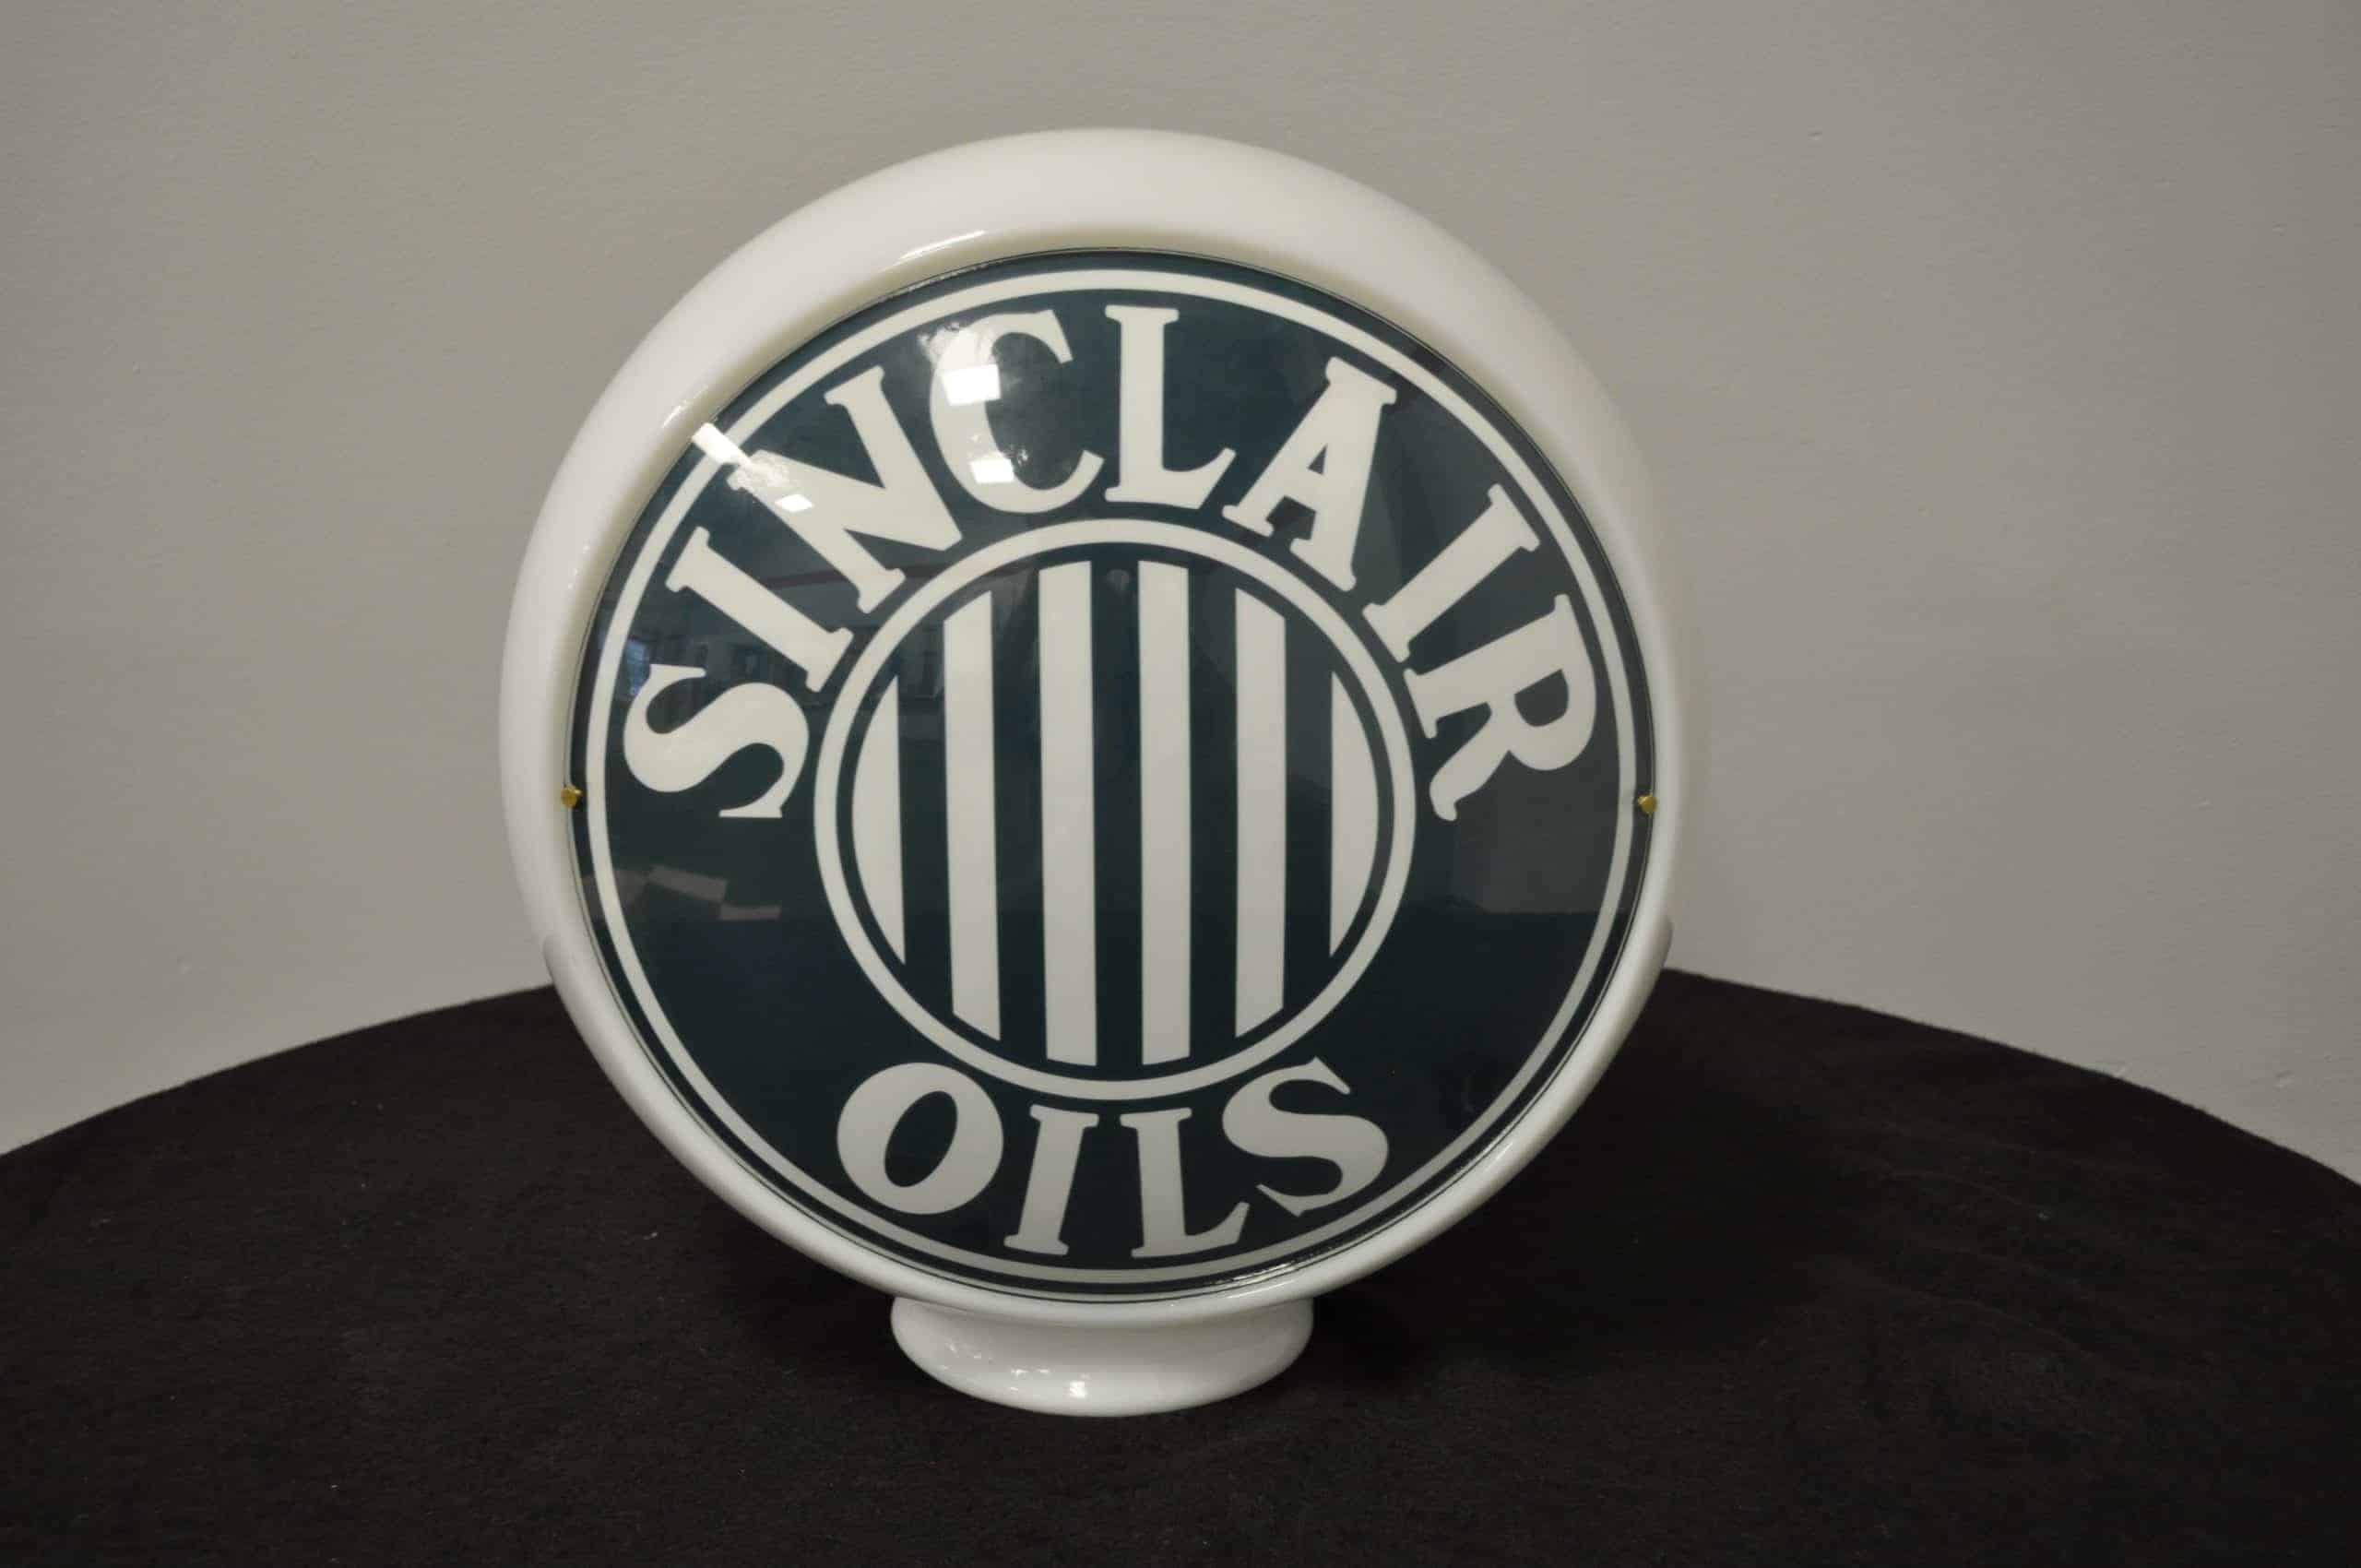 Sinclair Oils Glass Globe